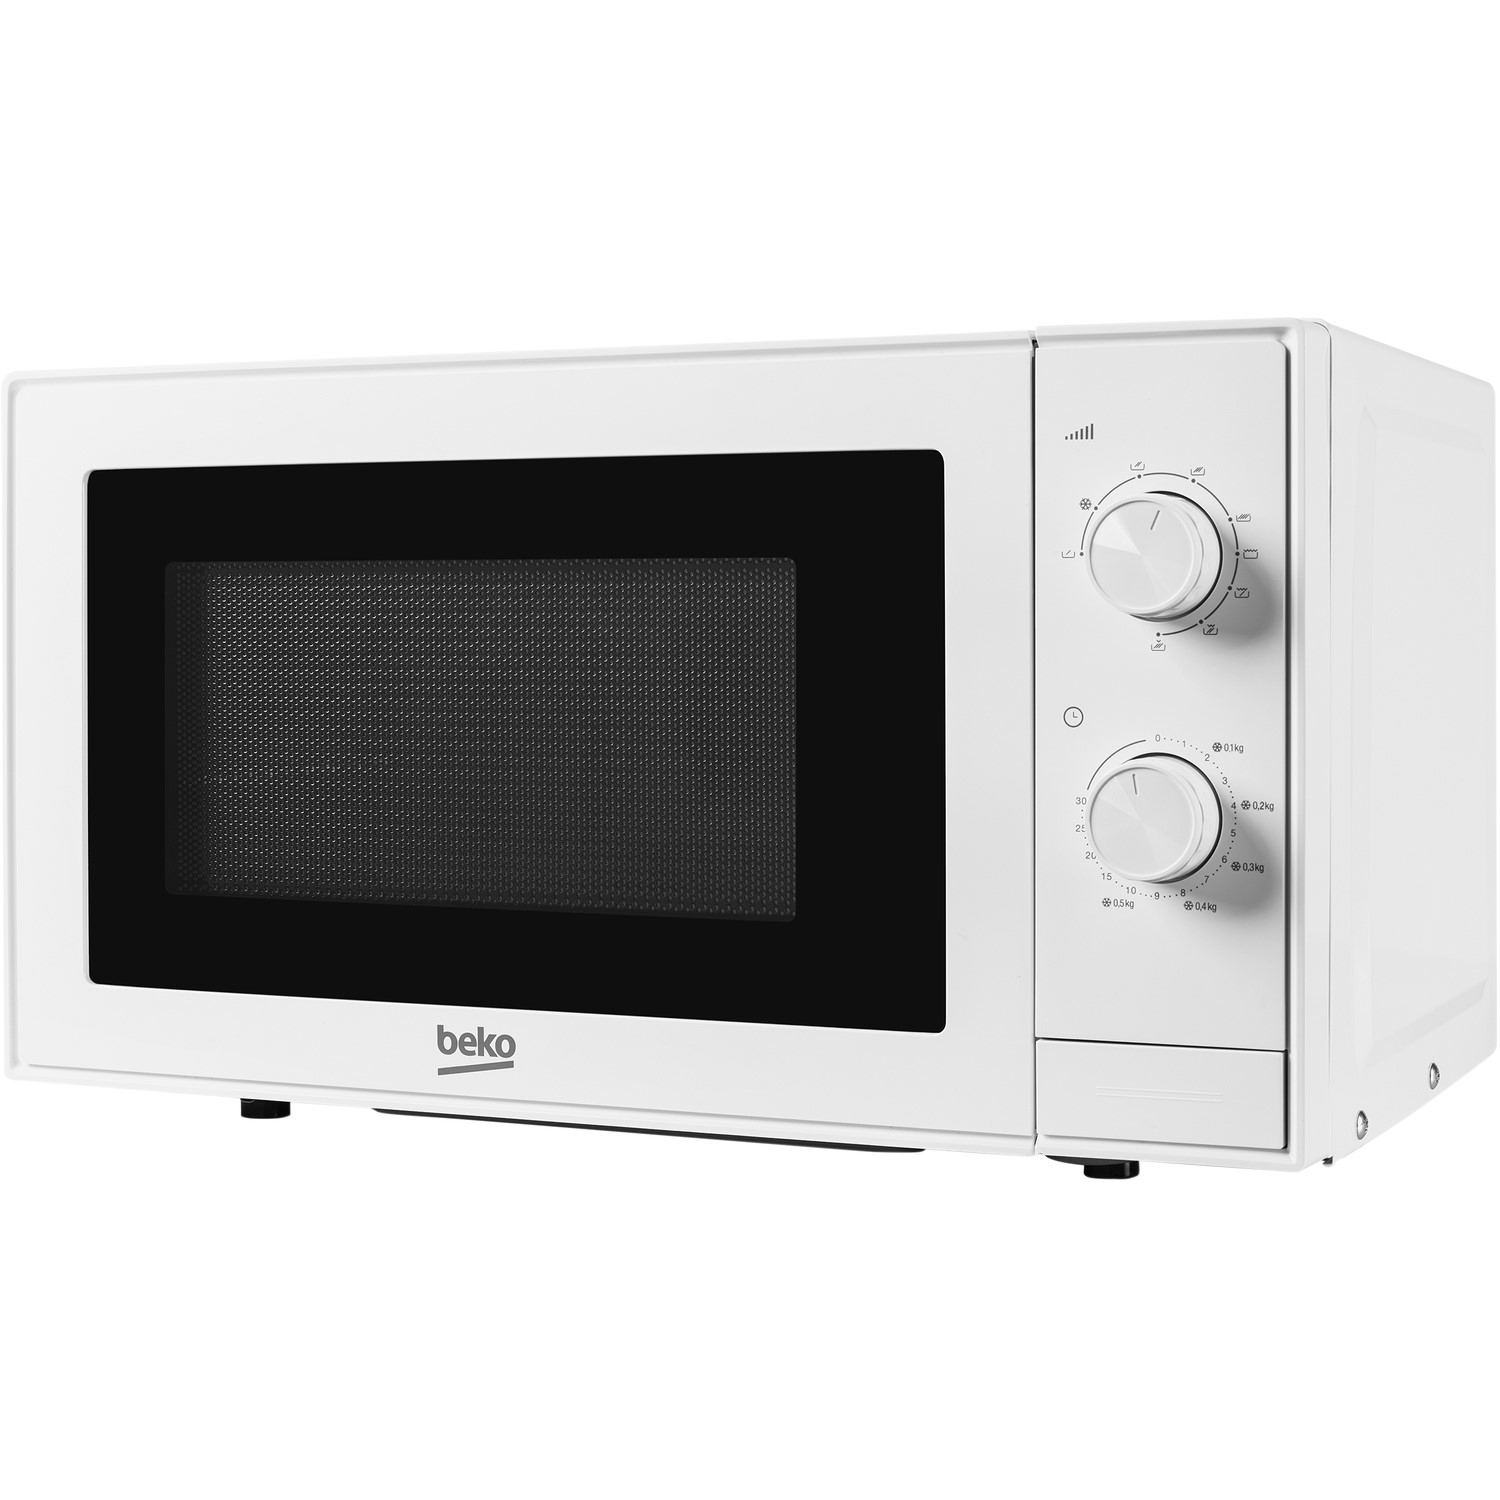 Beko MGC20100w 700W 20L Microwave Oven With Grill - white MGC20100w | eBay